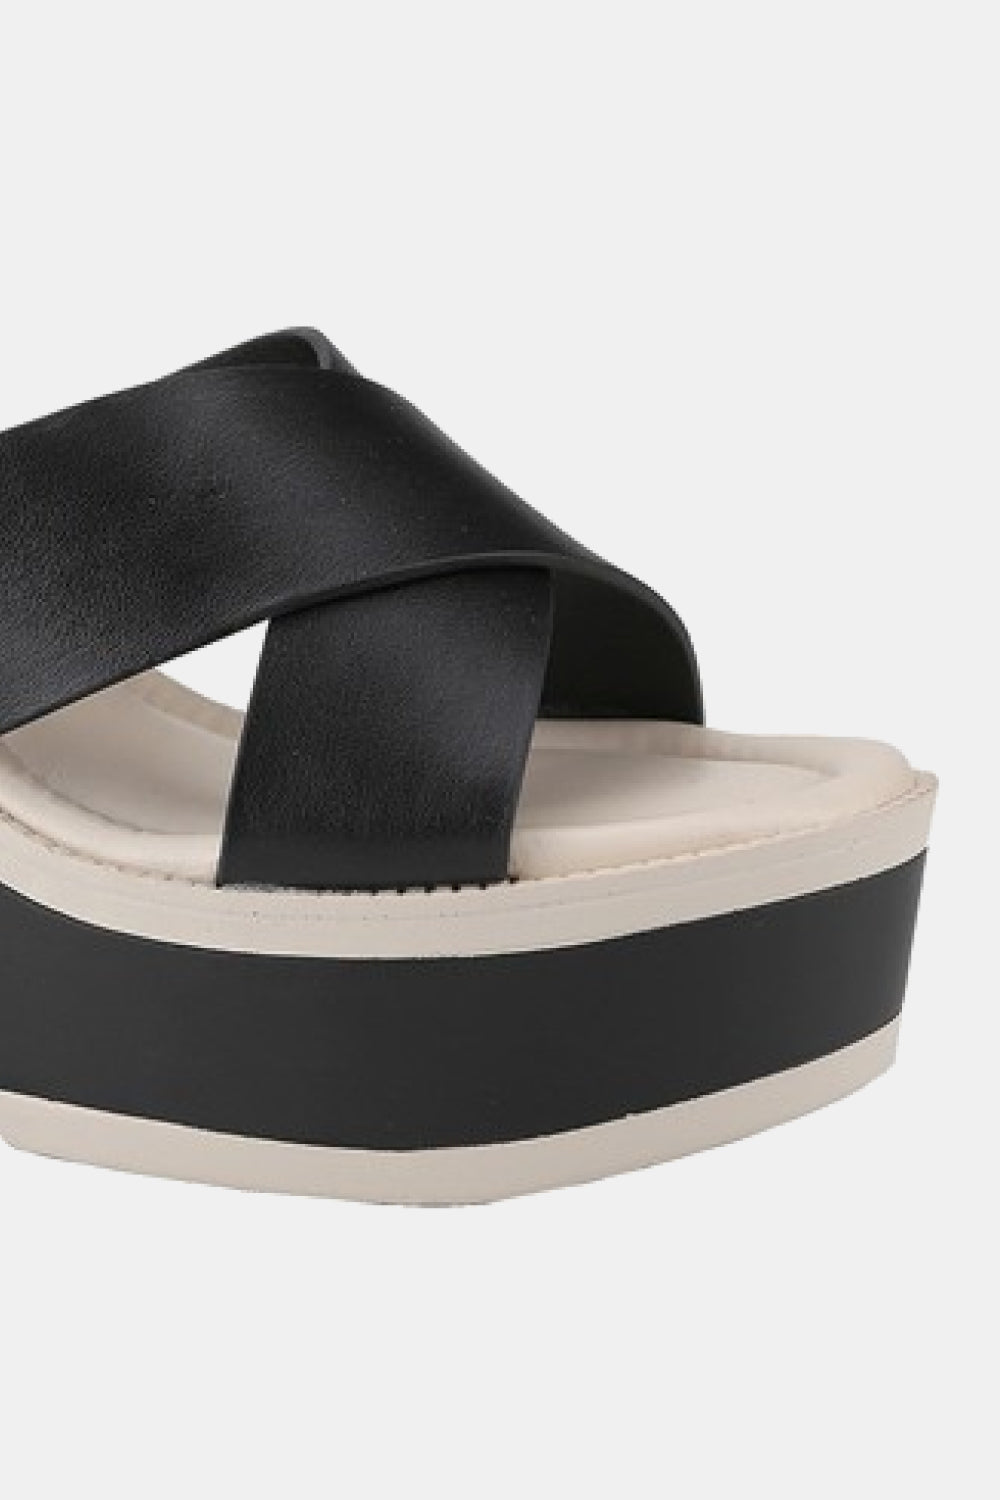 Cherish The Moments Contrast Platform Sandals in Black